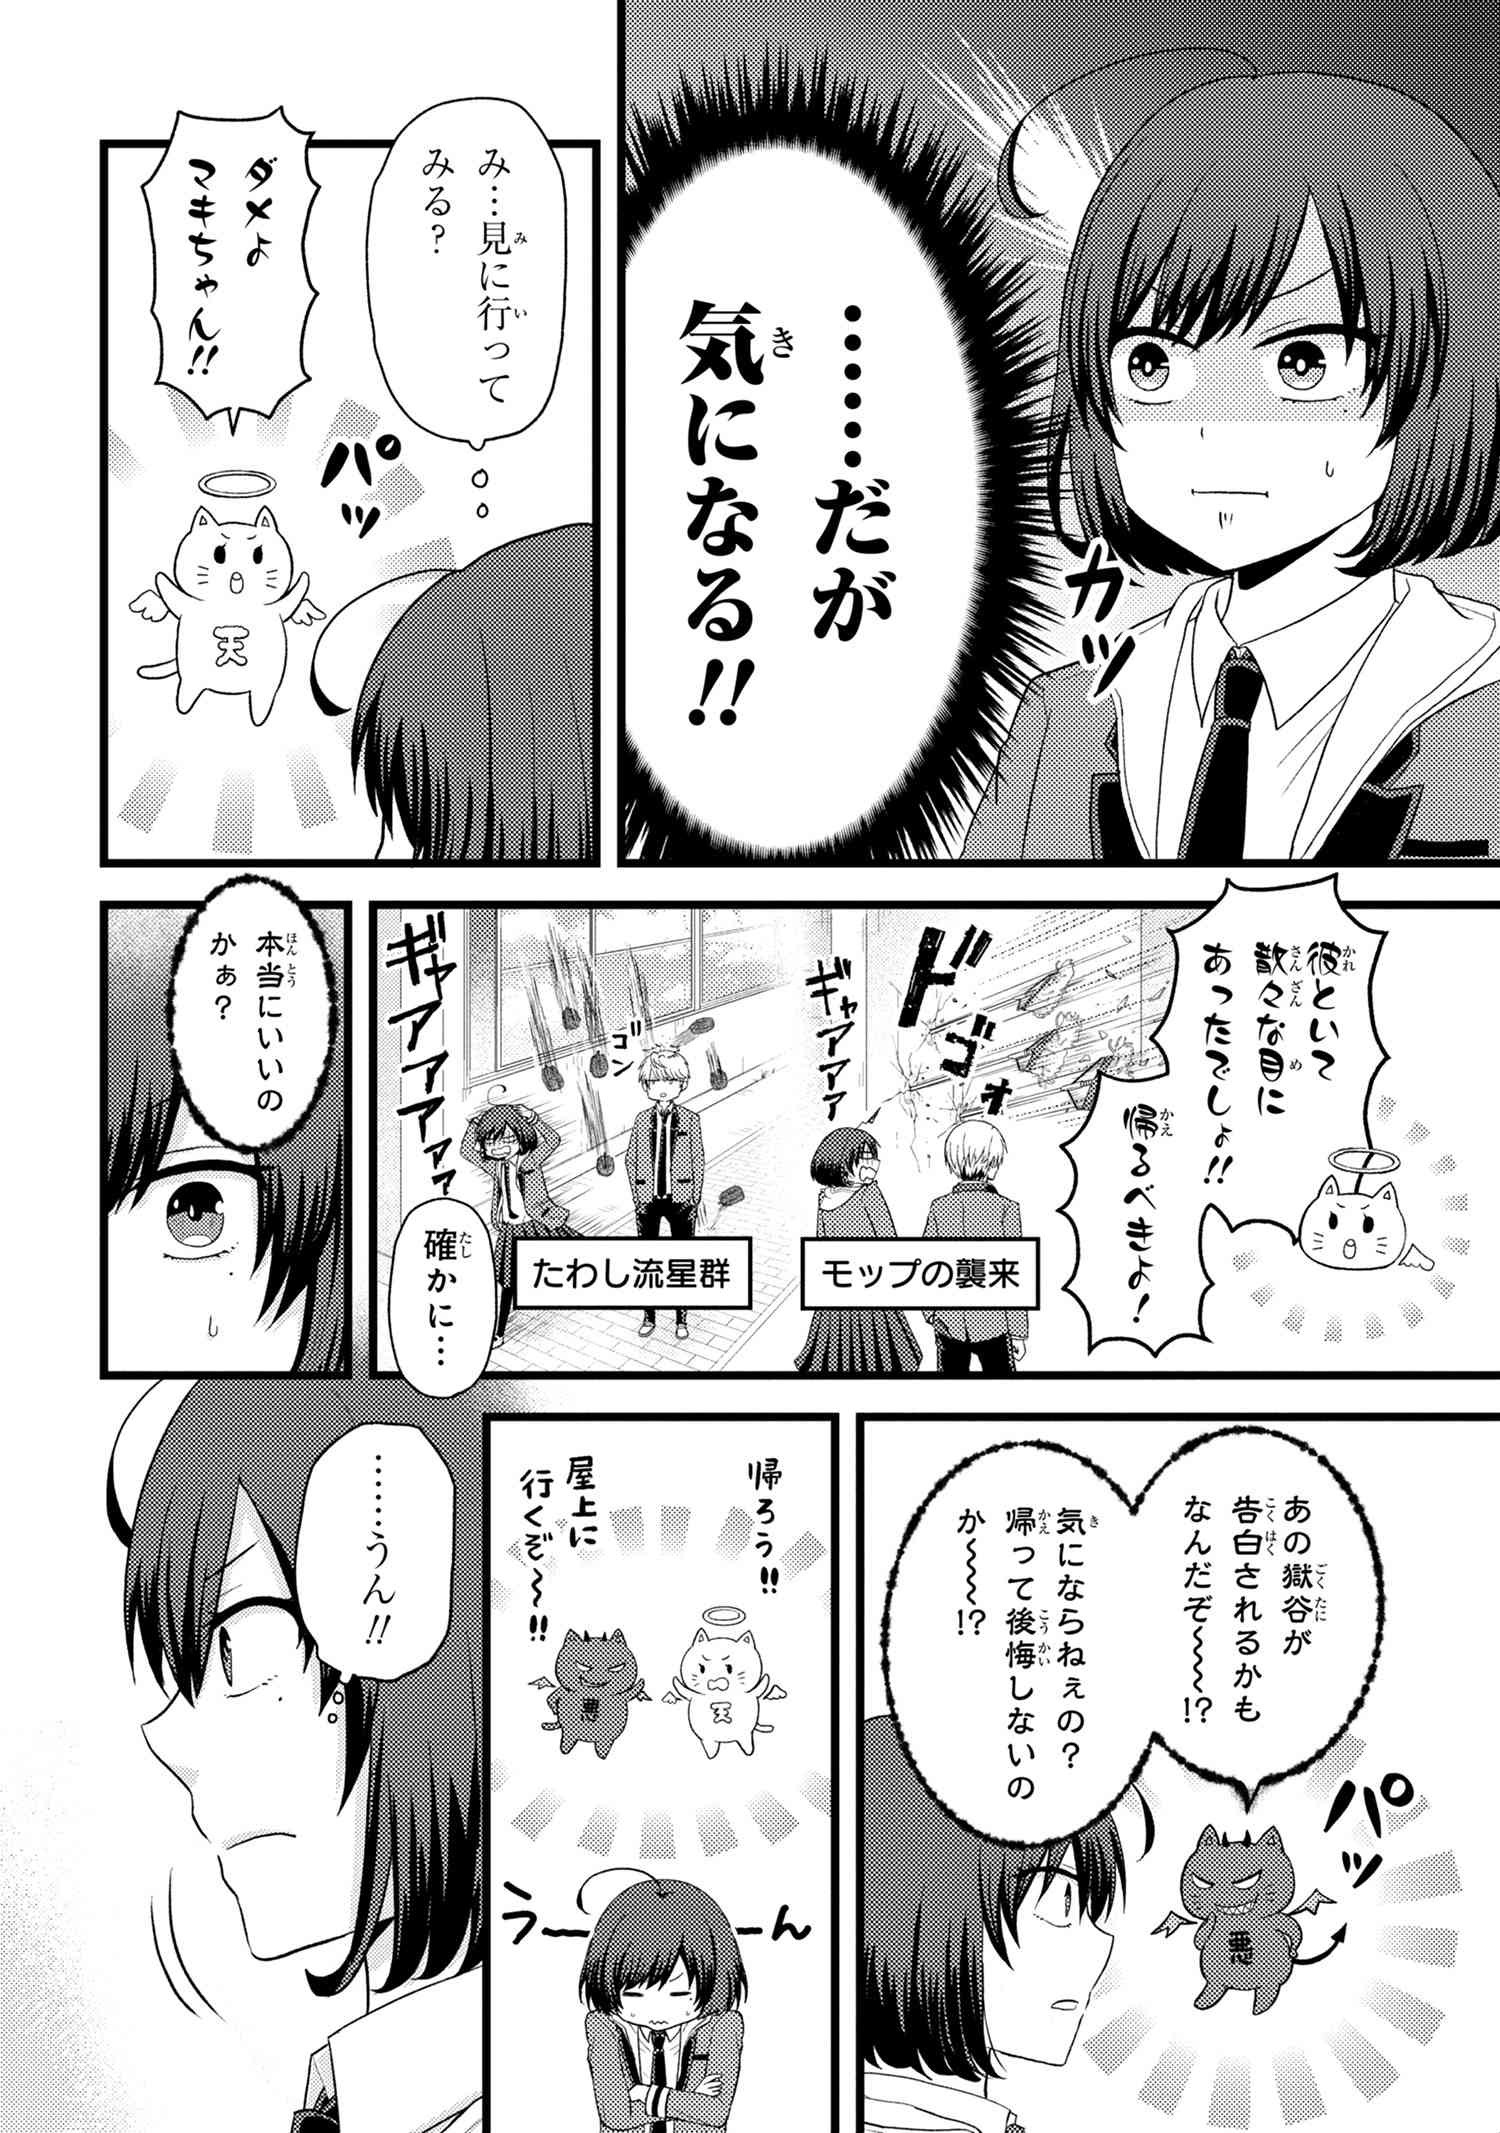 Tomodachi Inai Nekota-san to Sweets Tabetai Gokutani-kun - Chapter 4-4 - Page 2